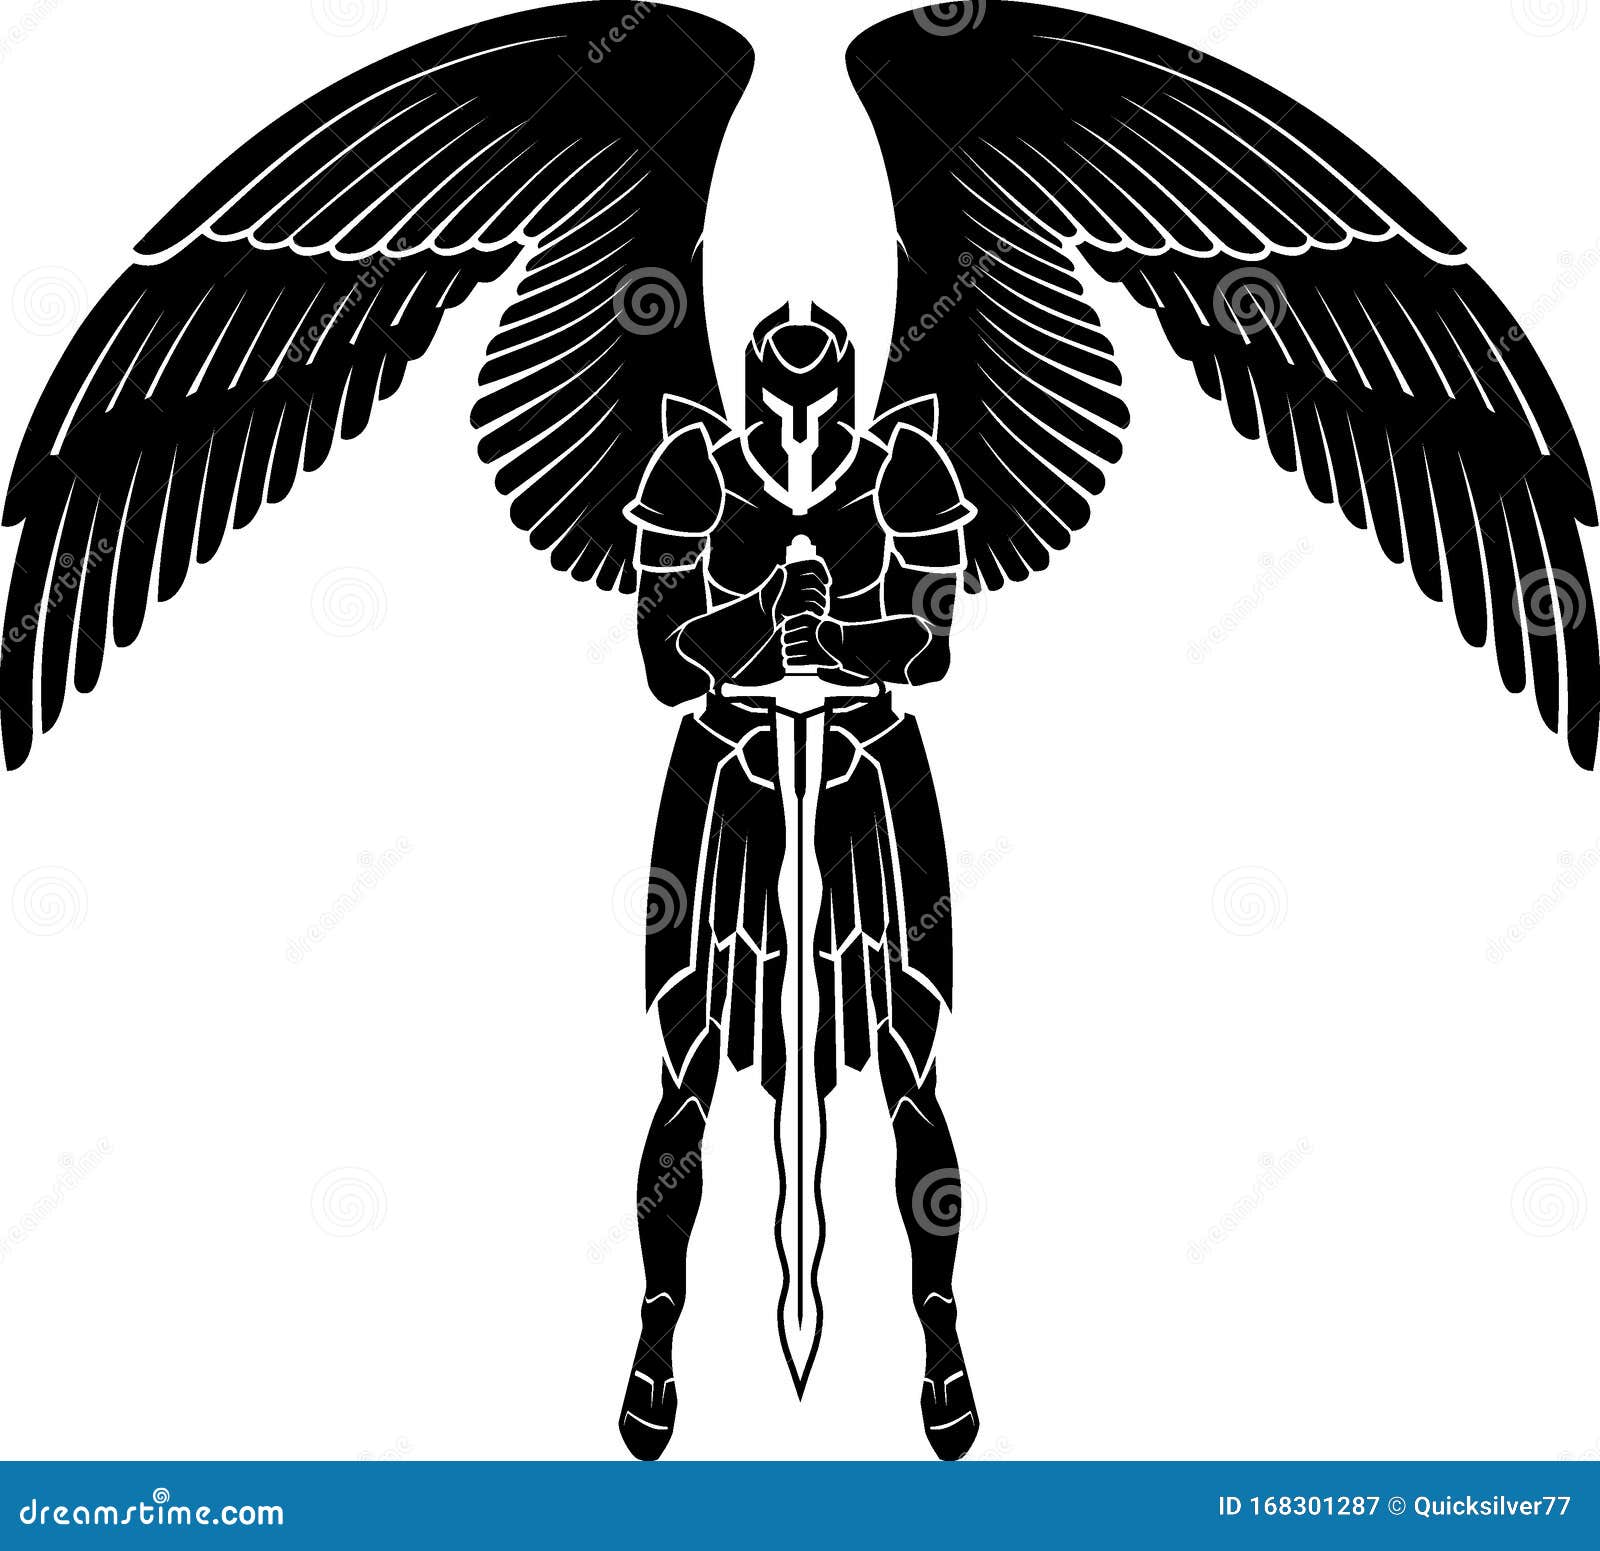 Fantasy art archangel